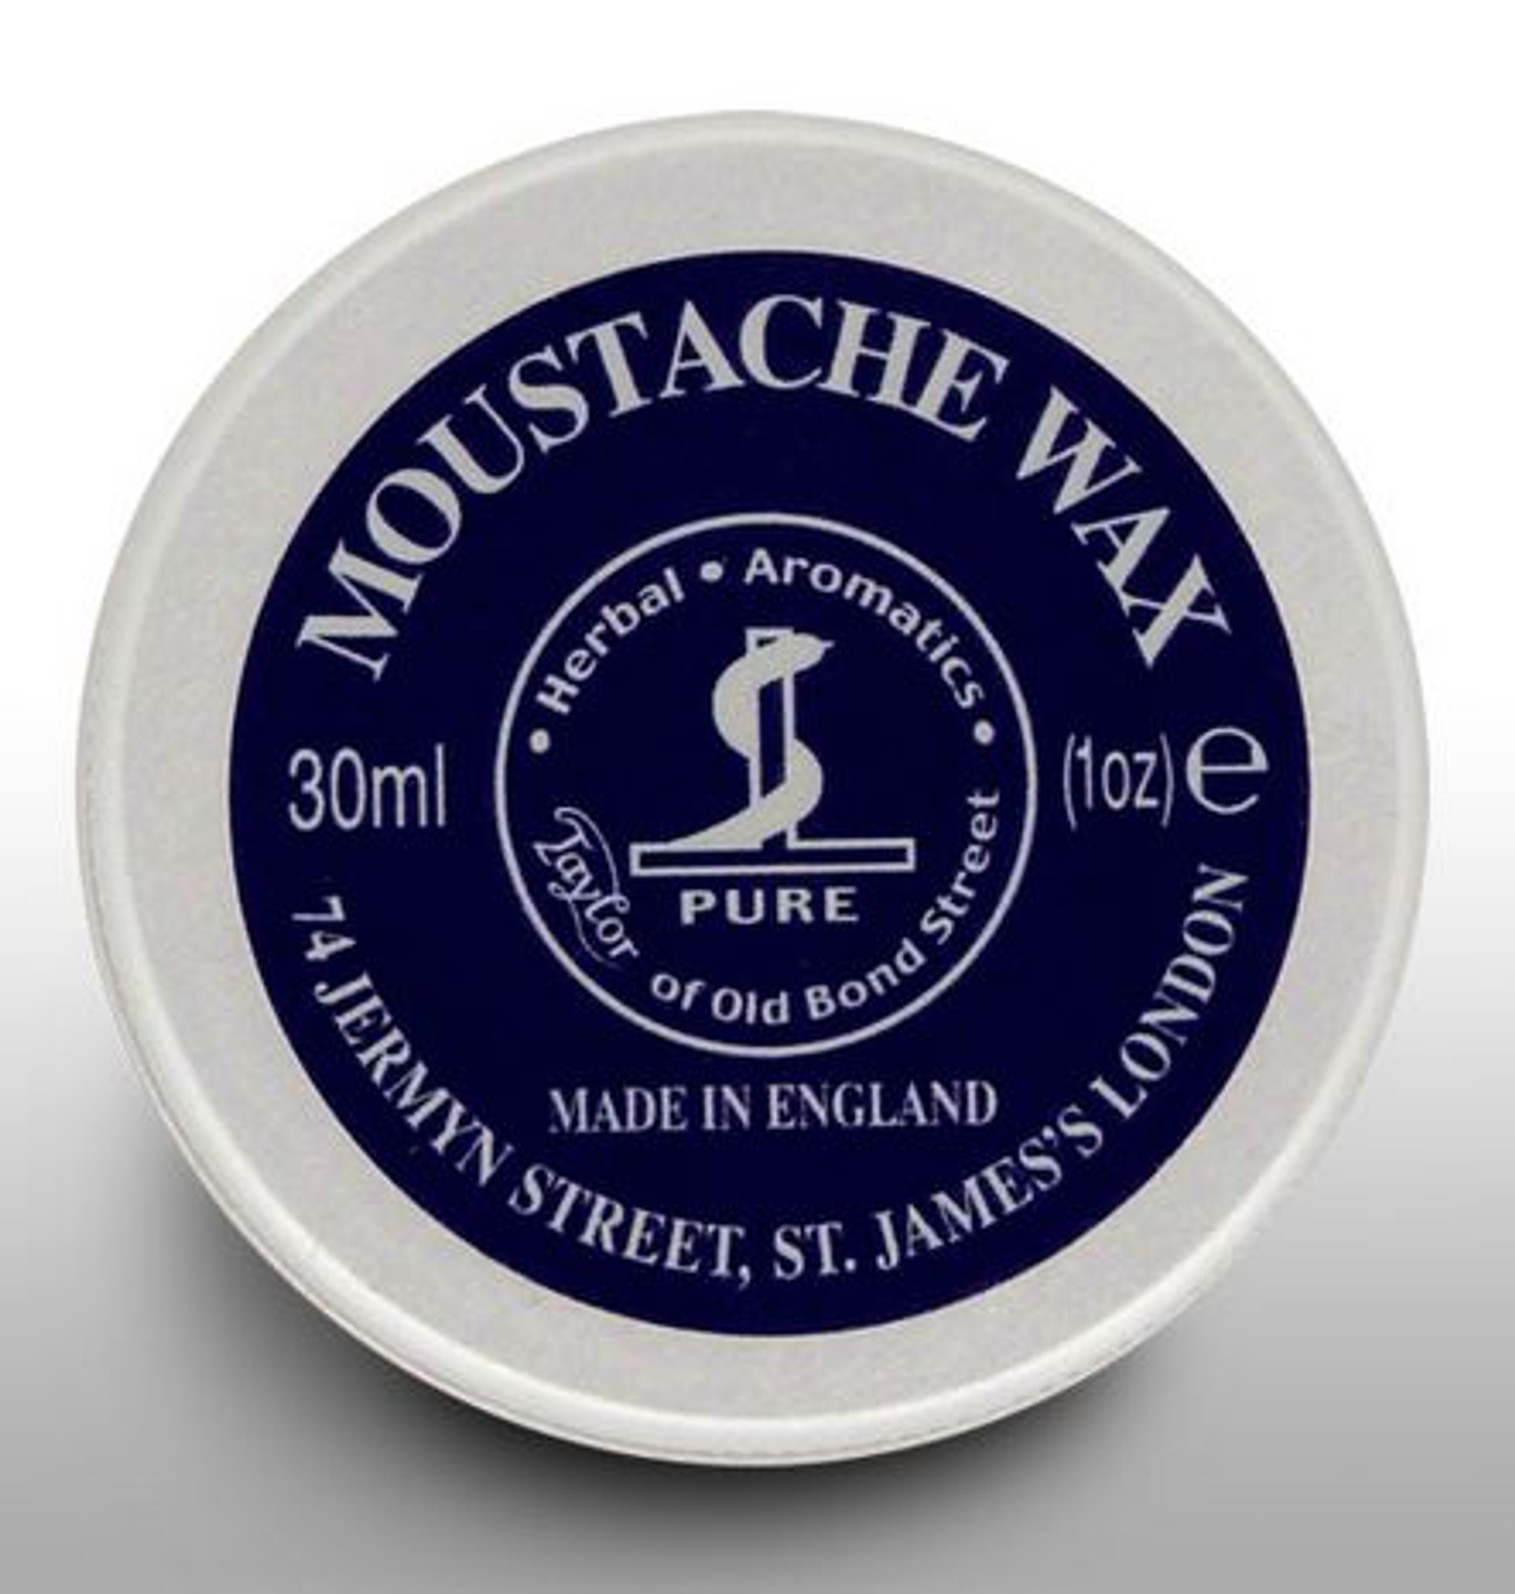 Taylor of Old Bond Street Moustache Wax 30ml